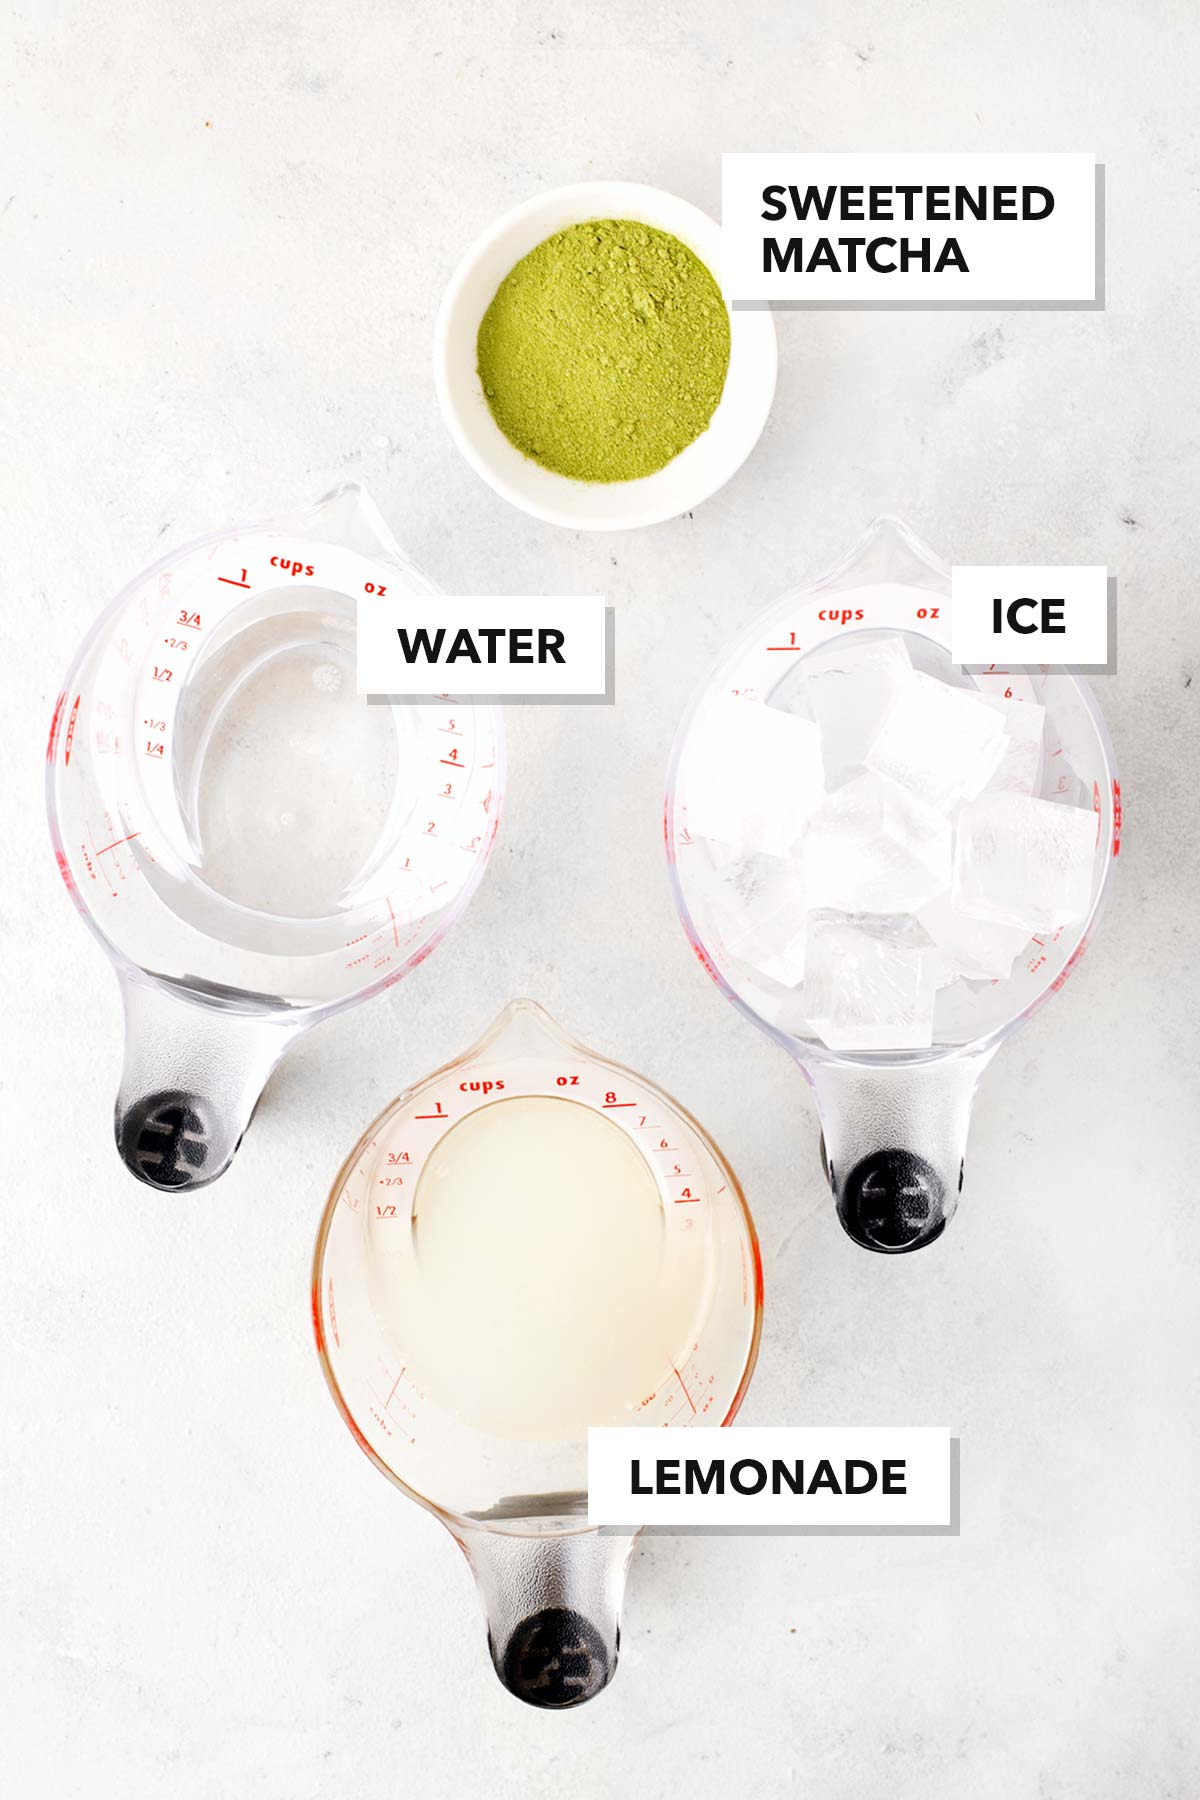 Starbucks Matcha Lemonade Copycat ingredients measured in cups and bowls.